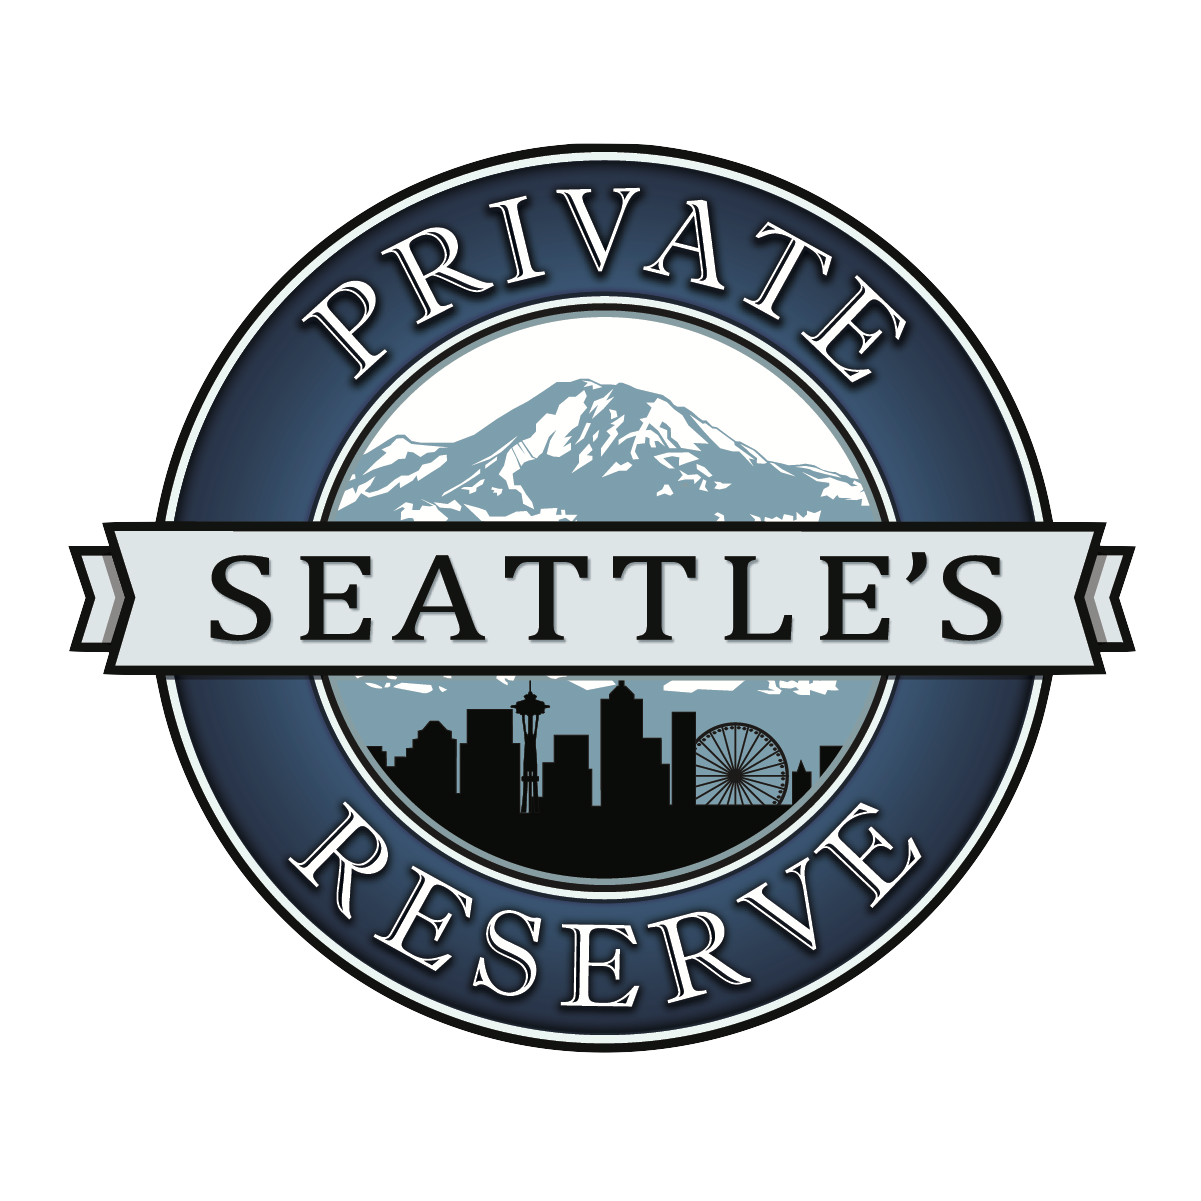 Seattle's Private Reserve